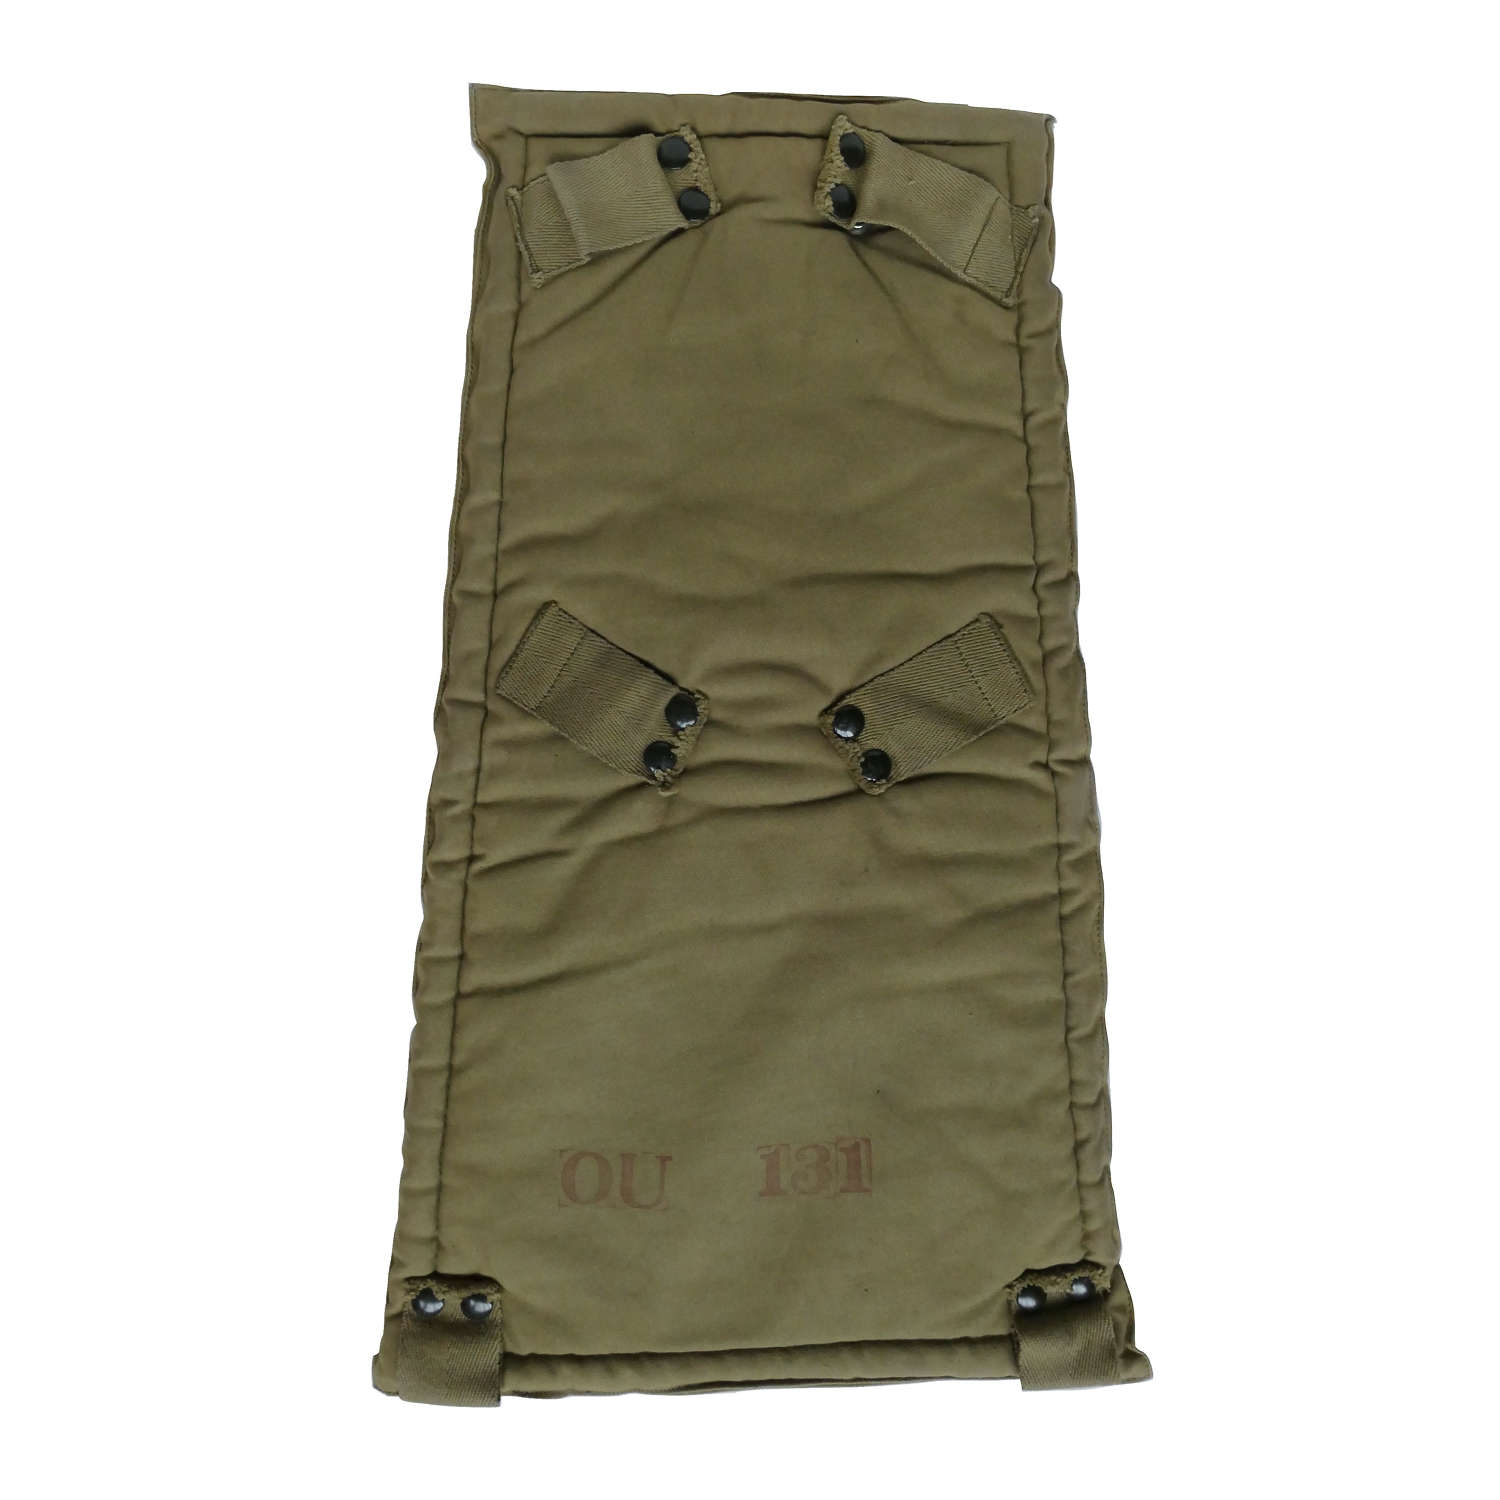 RCAF / RAF parachute backpad